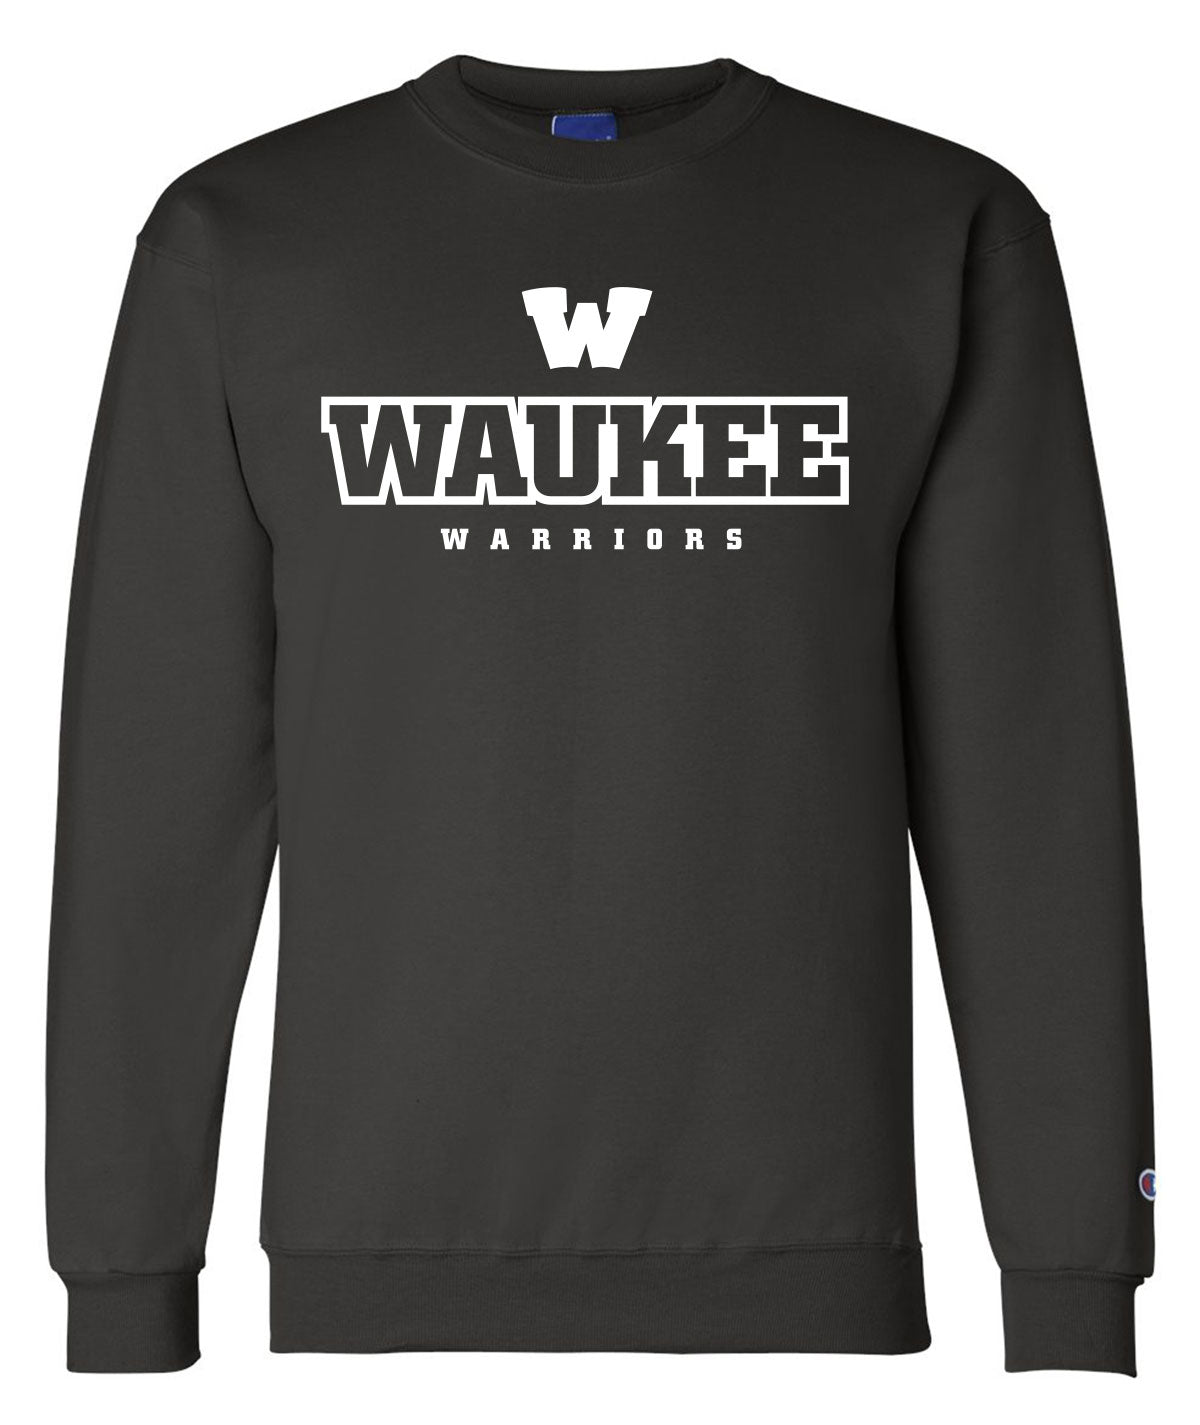 Waukee Warriors Champion Crewneck Sweatshirt